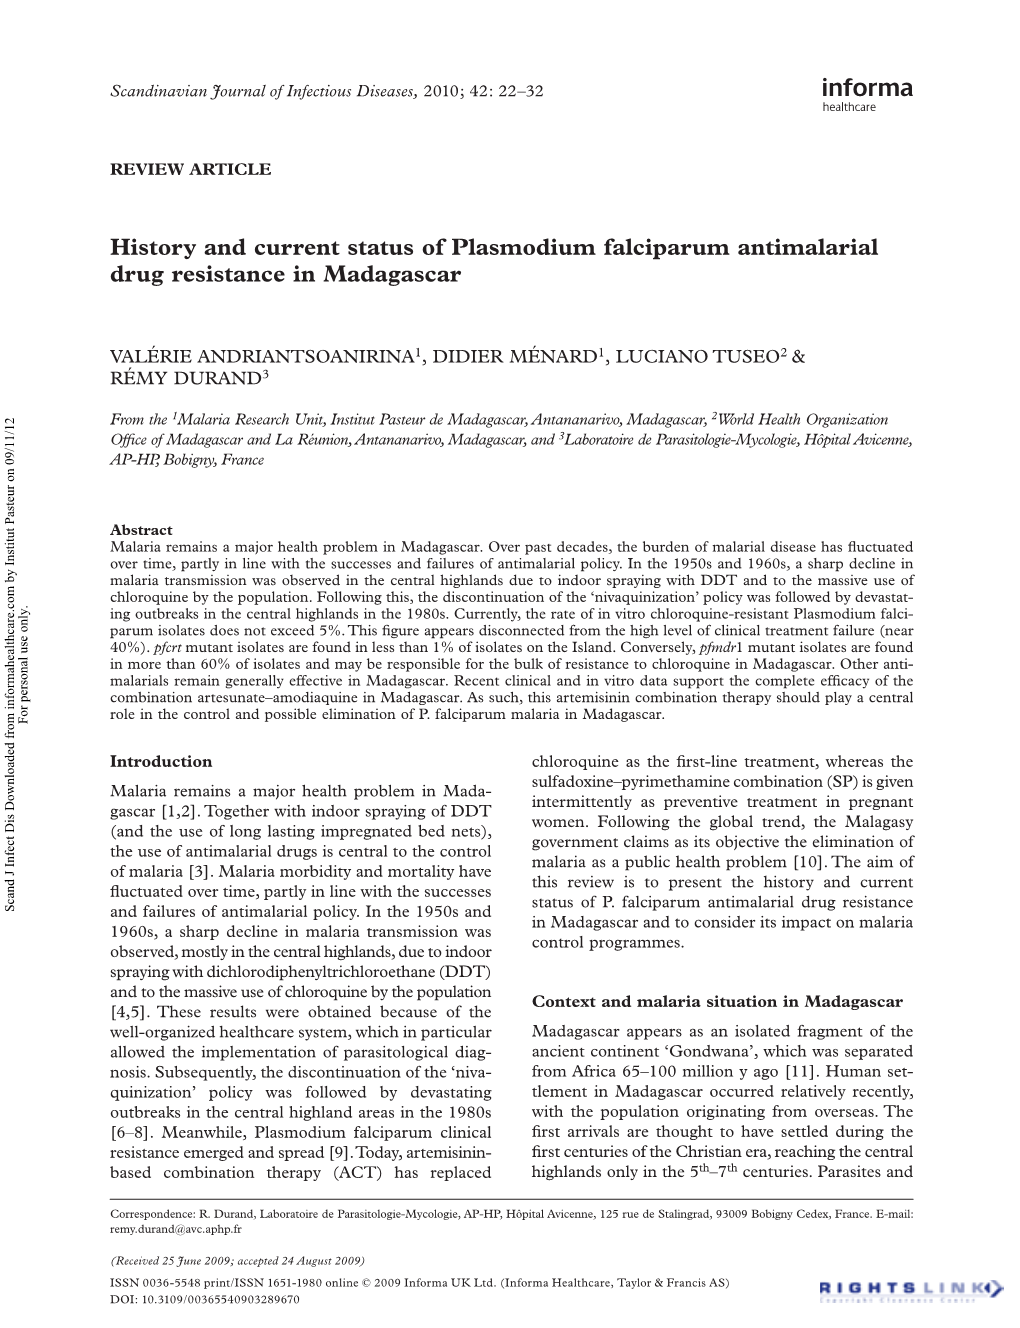 History and Current Status of Plasmodium Falciparum Antimalarial Drug Resistance in Madagascar